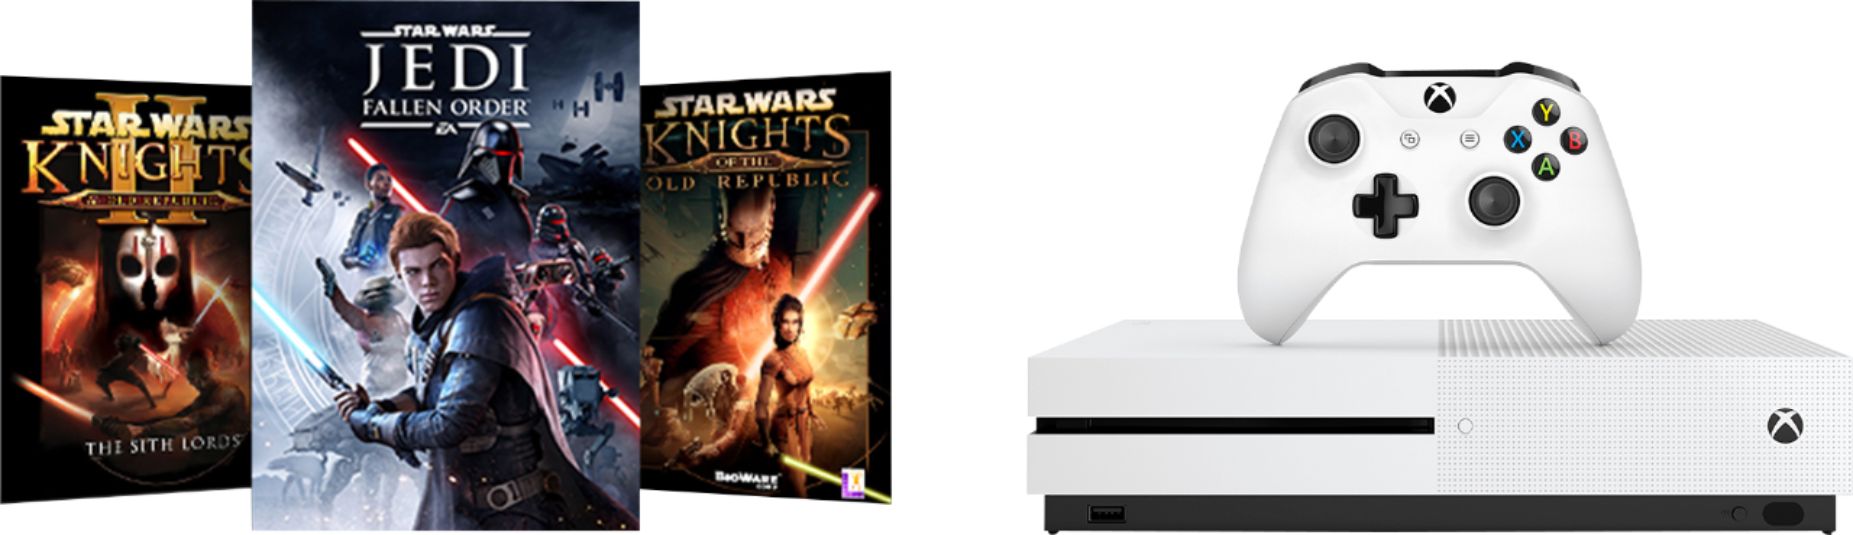  Xbox One X 1TB Star Wars Jedi Bundle Console - Xbox One X  Console & Controller included - Digital download of Star Wars Jedi game -  12GB RAM 1TB HDD 